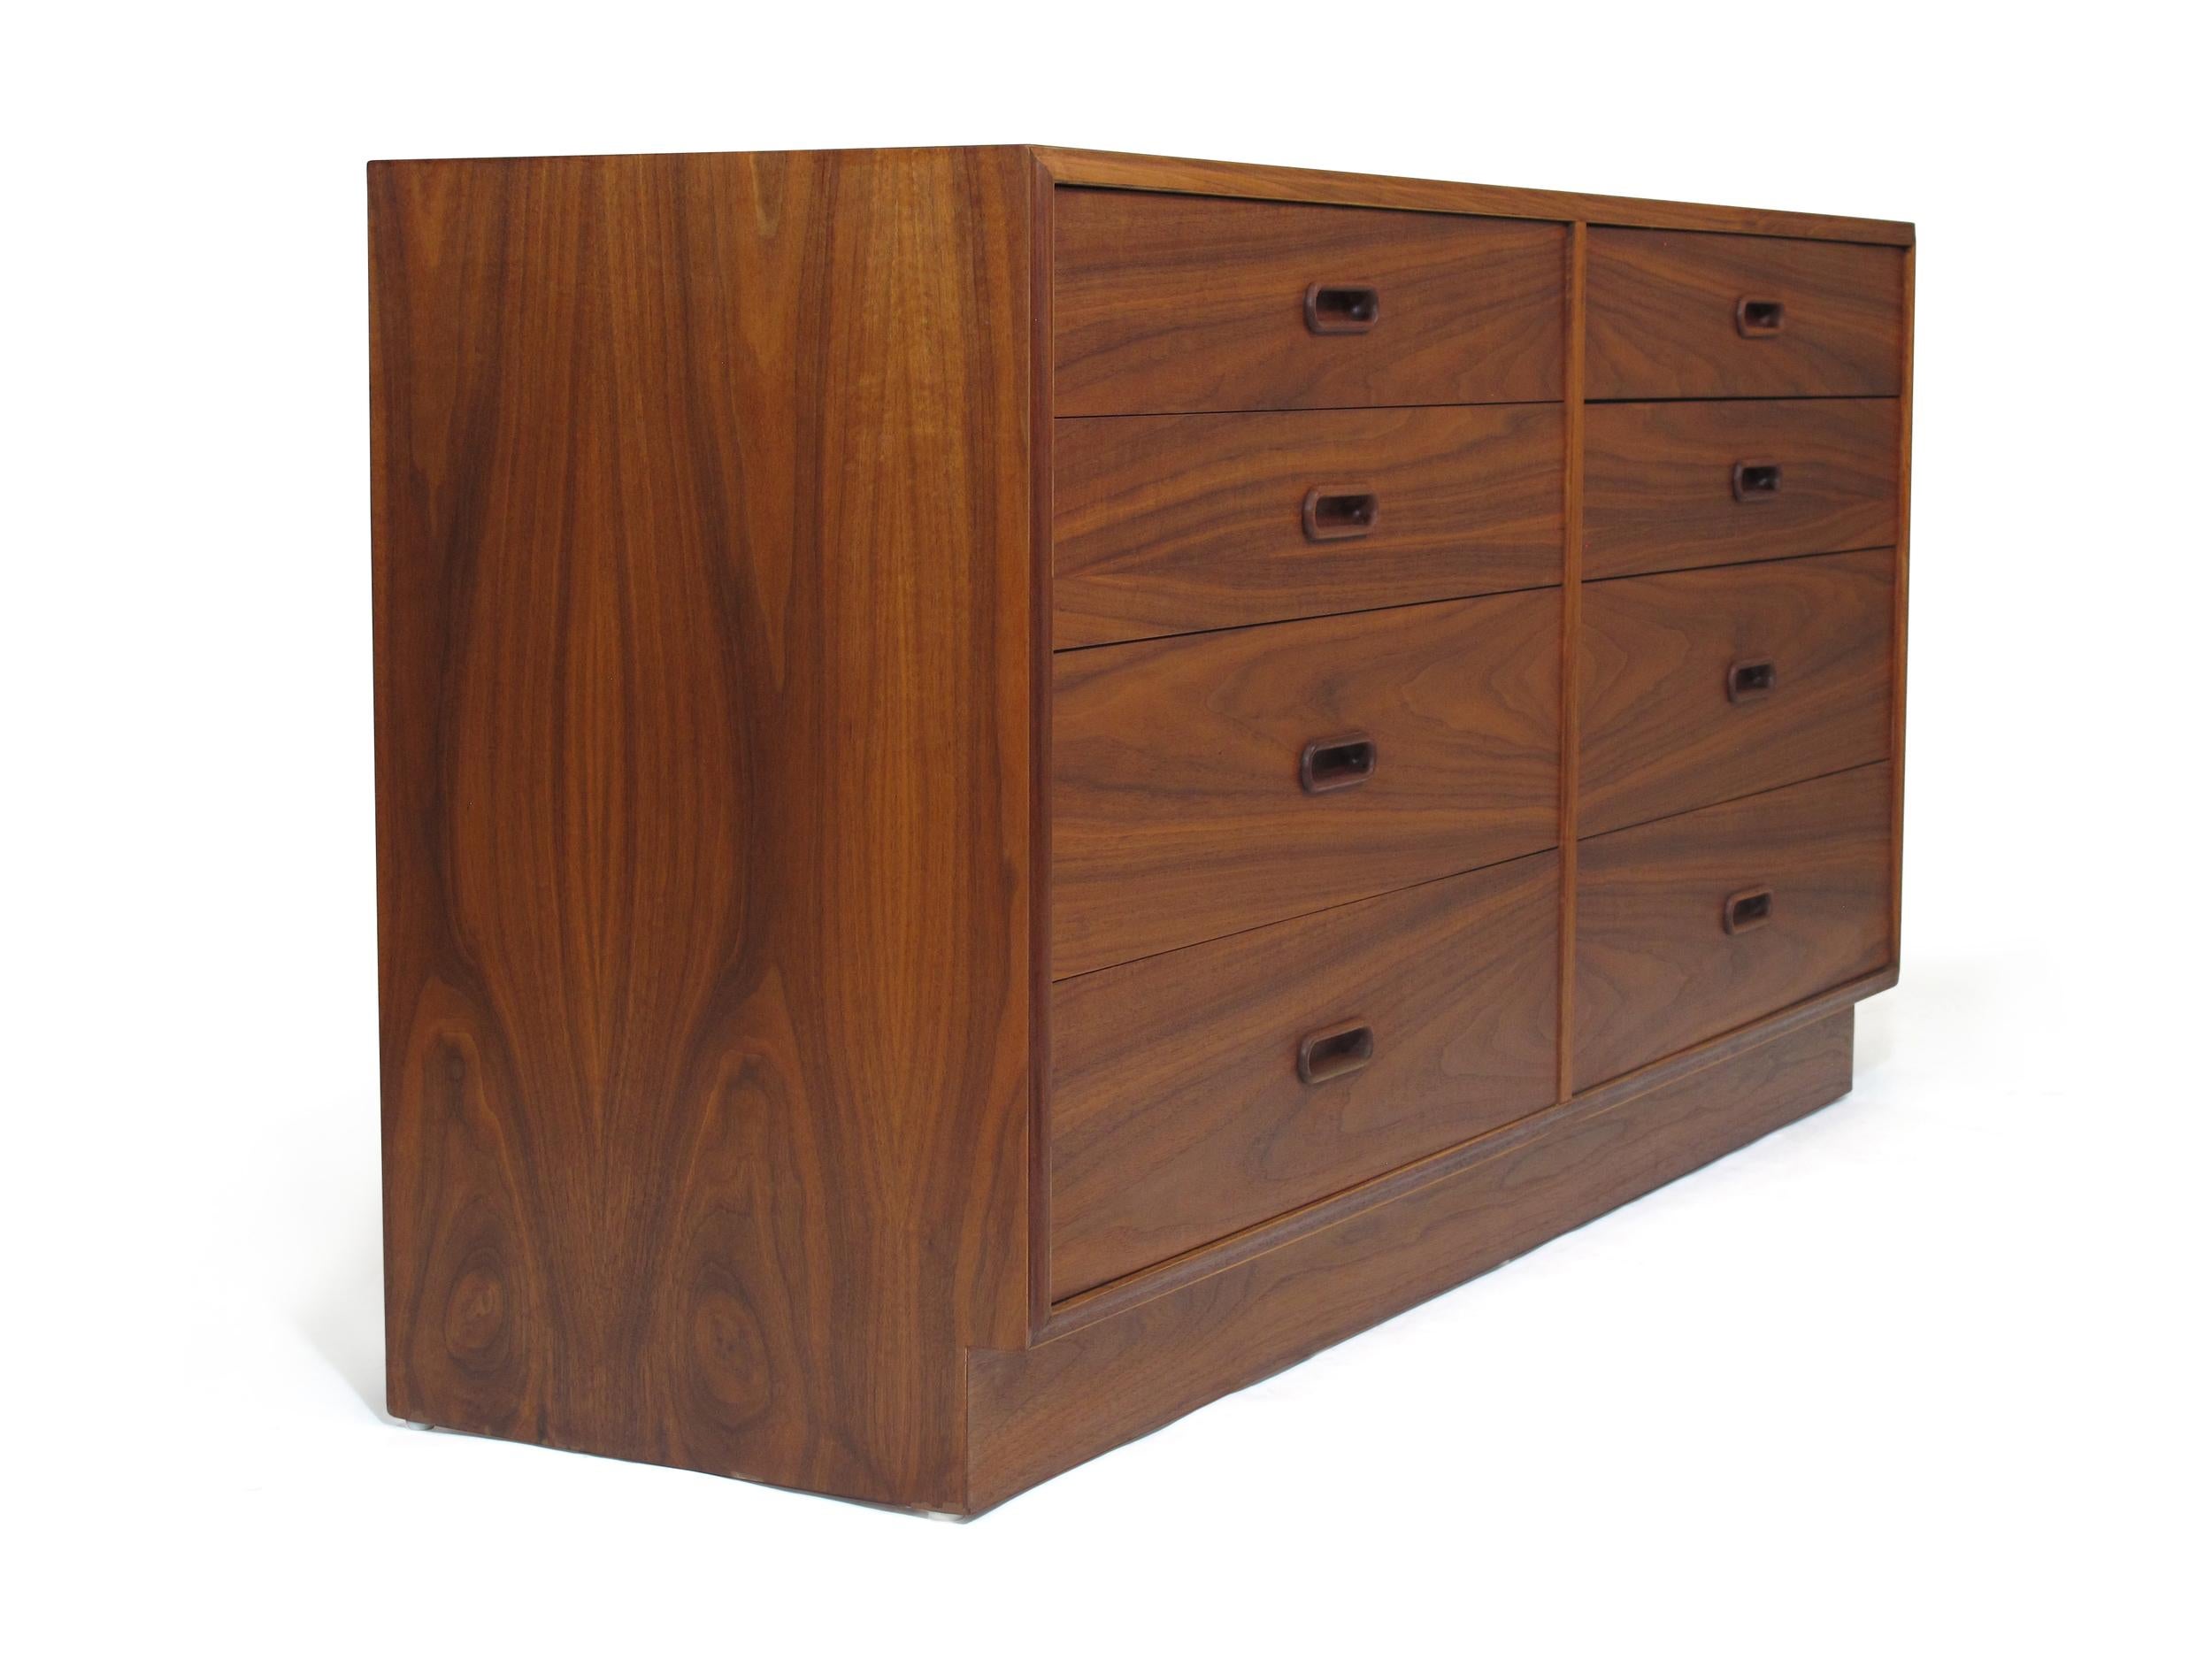 20th Century American Walnut Dresser with Eight Drawers